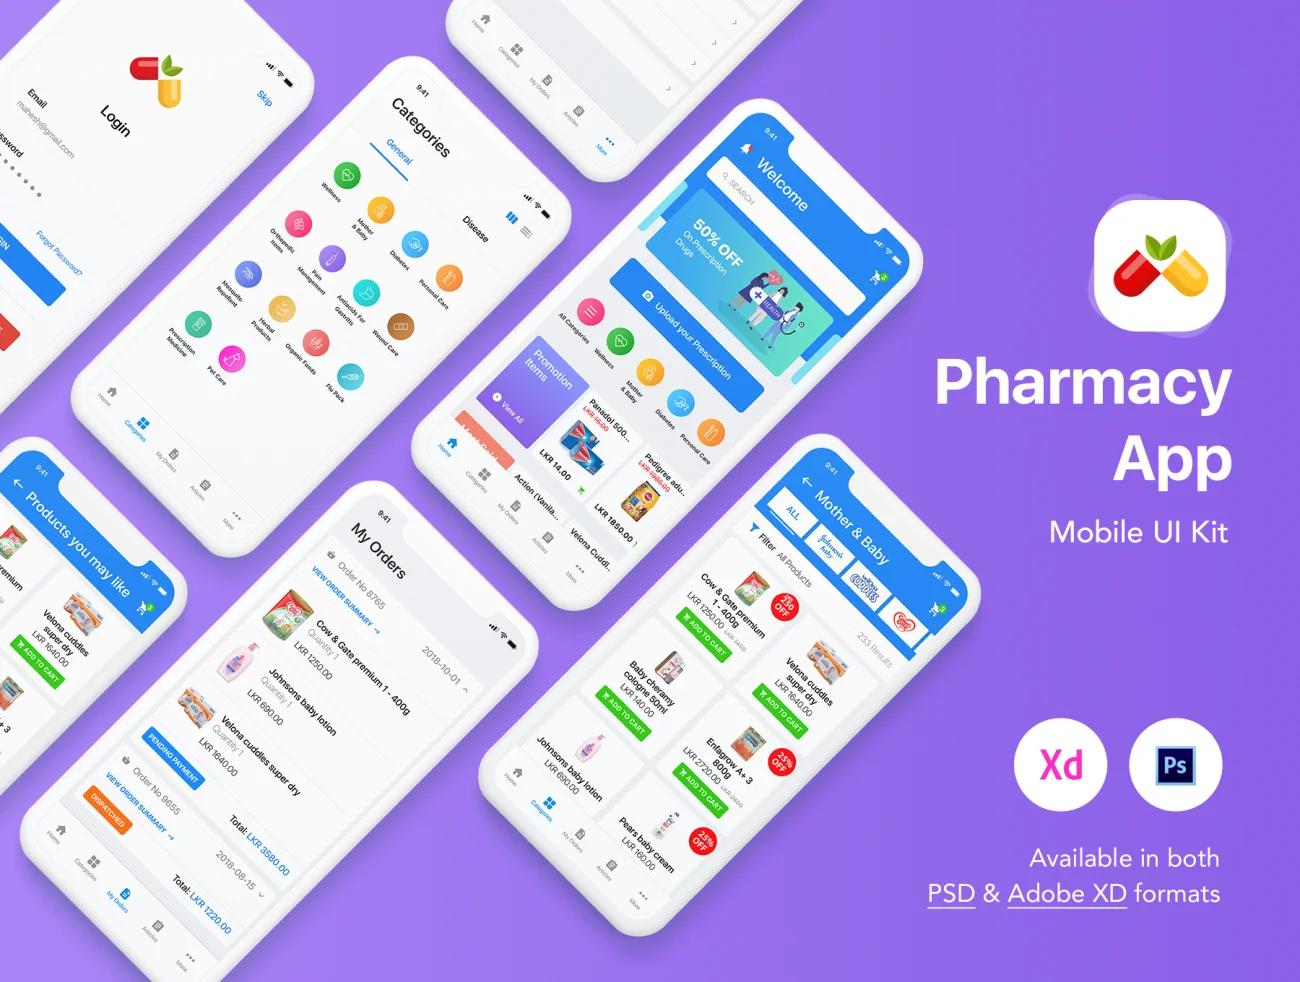 Pharmacy App Mobile UI Kit 中西医药房应用病患平台移动用户界面设计套件-UI/UX-到位啦UI